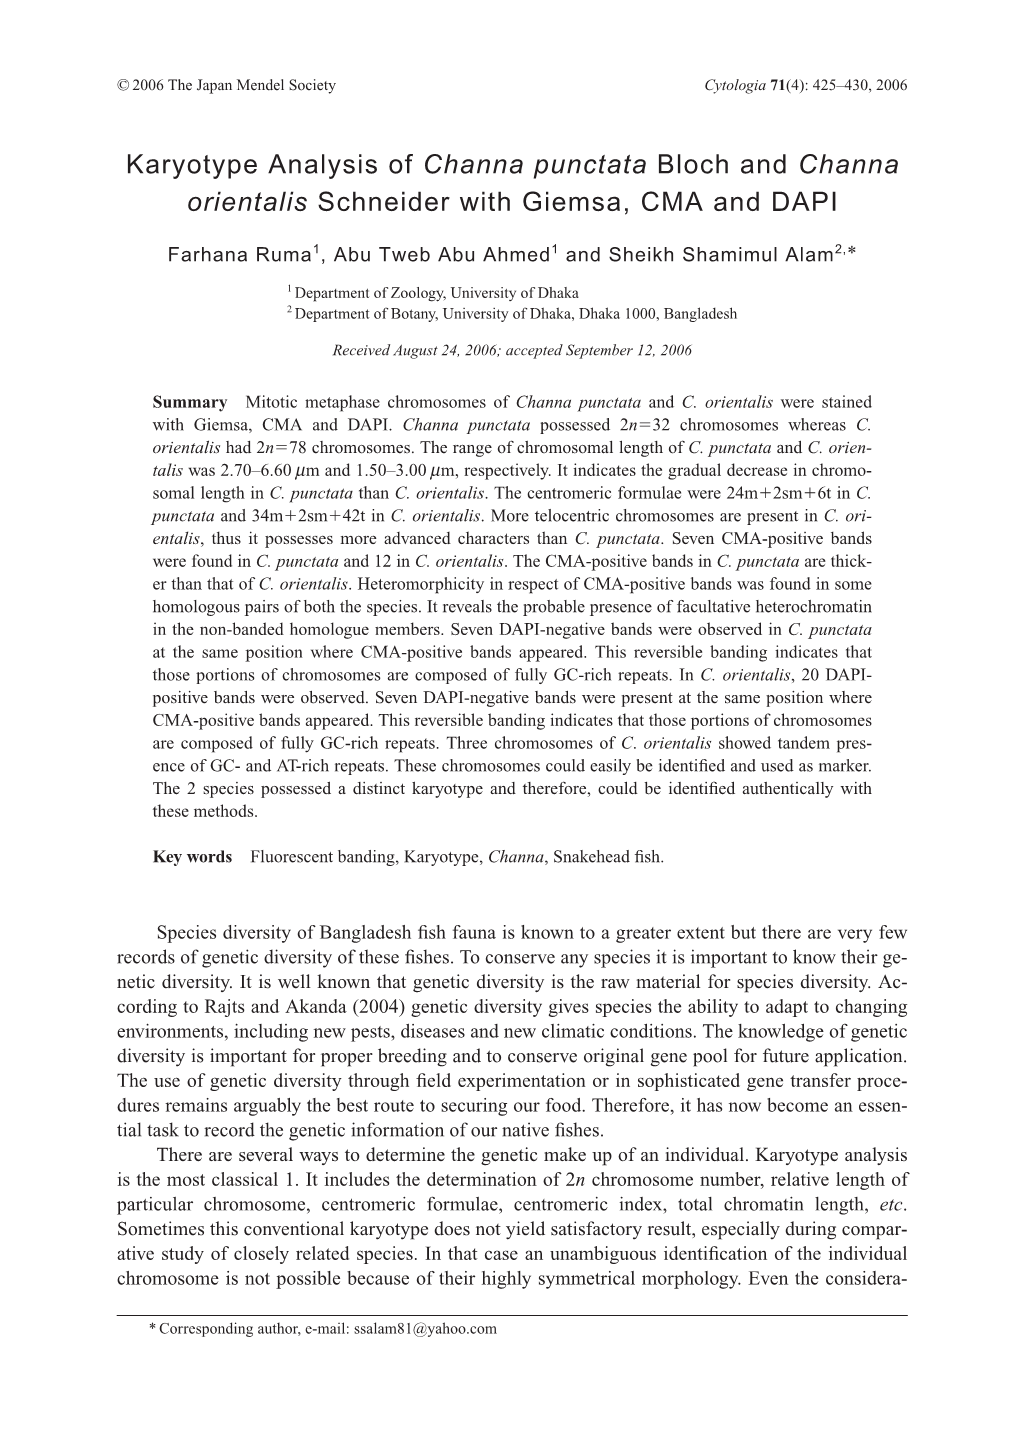 Karyotype Analysis of Channa Punctata Bloch and Channa Orientalis Schneider with Giemsa, CMA and DAPI